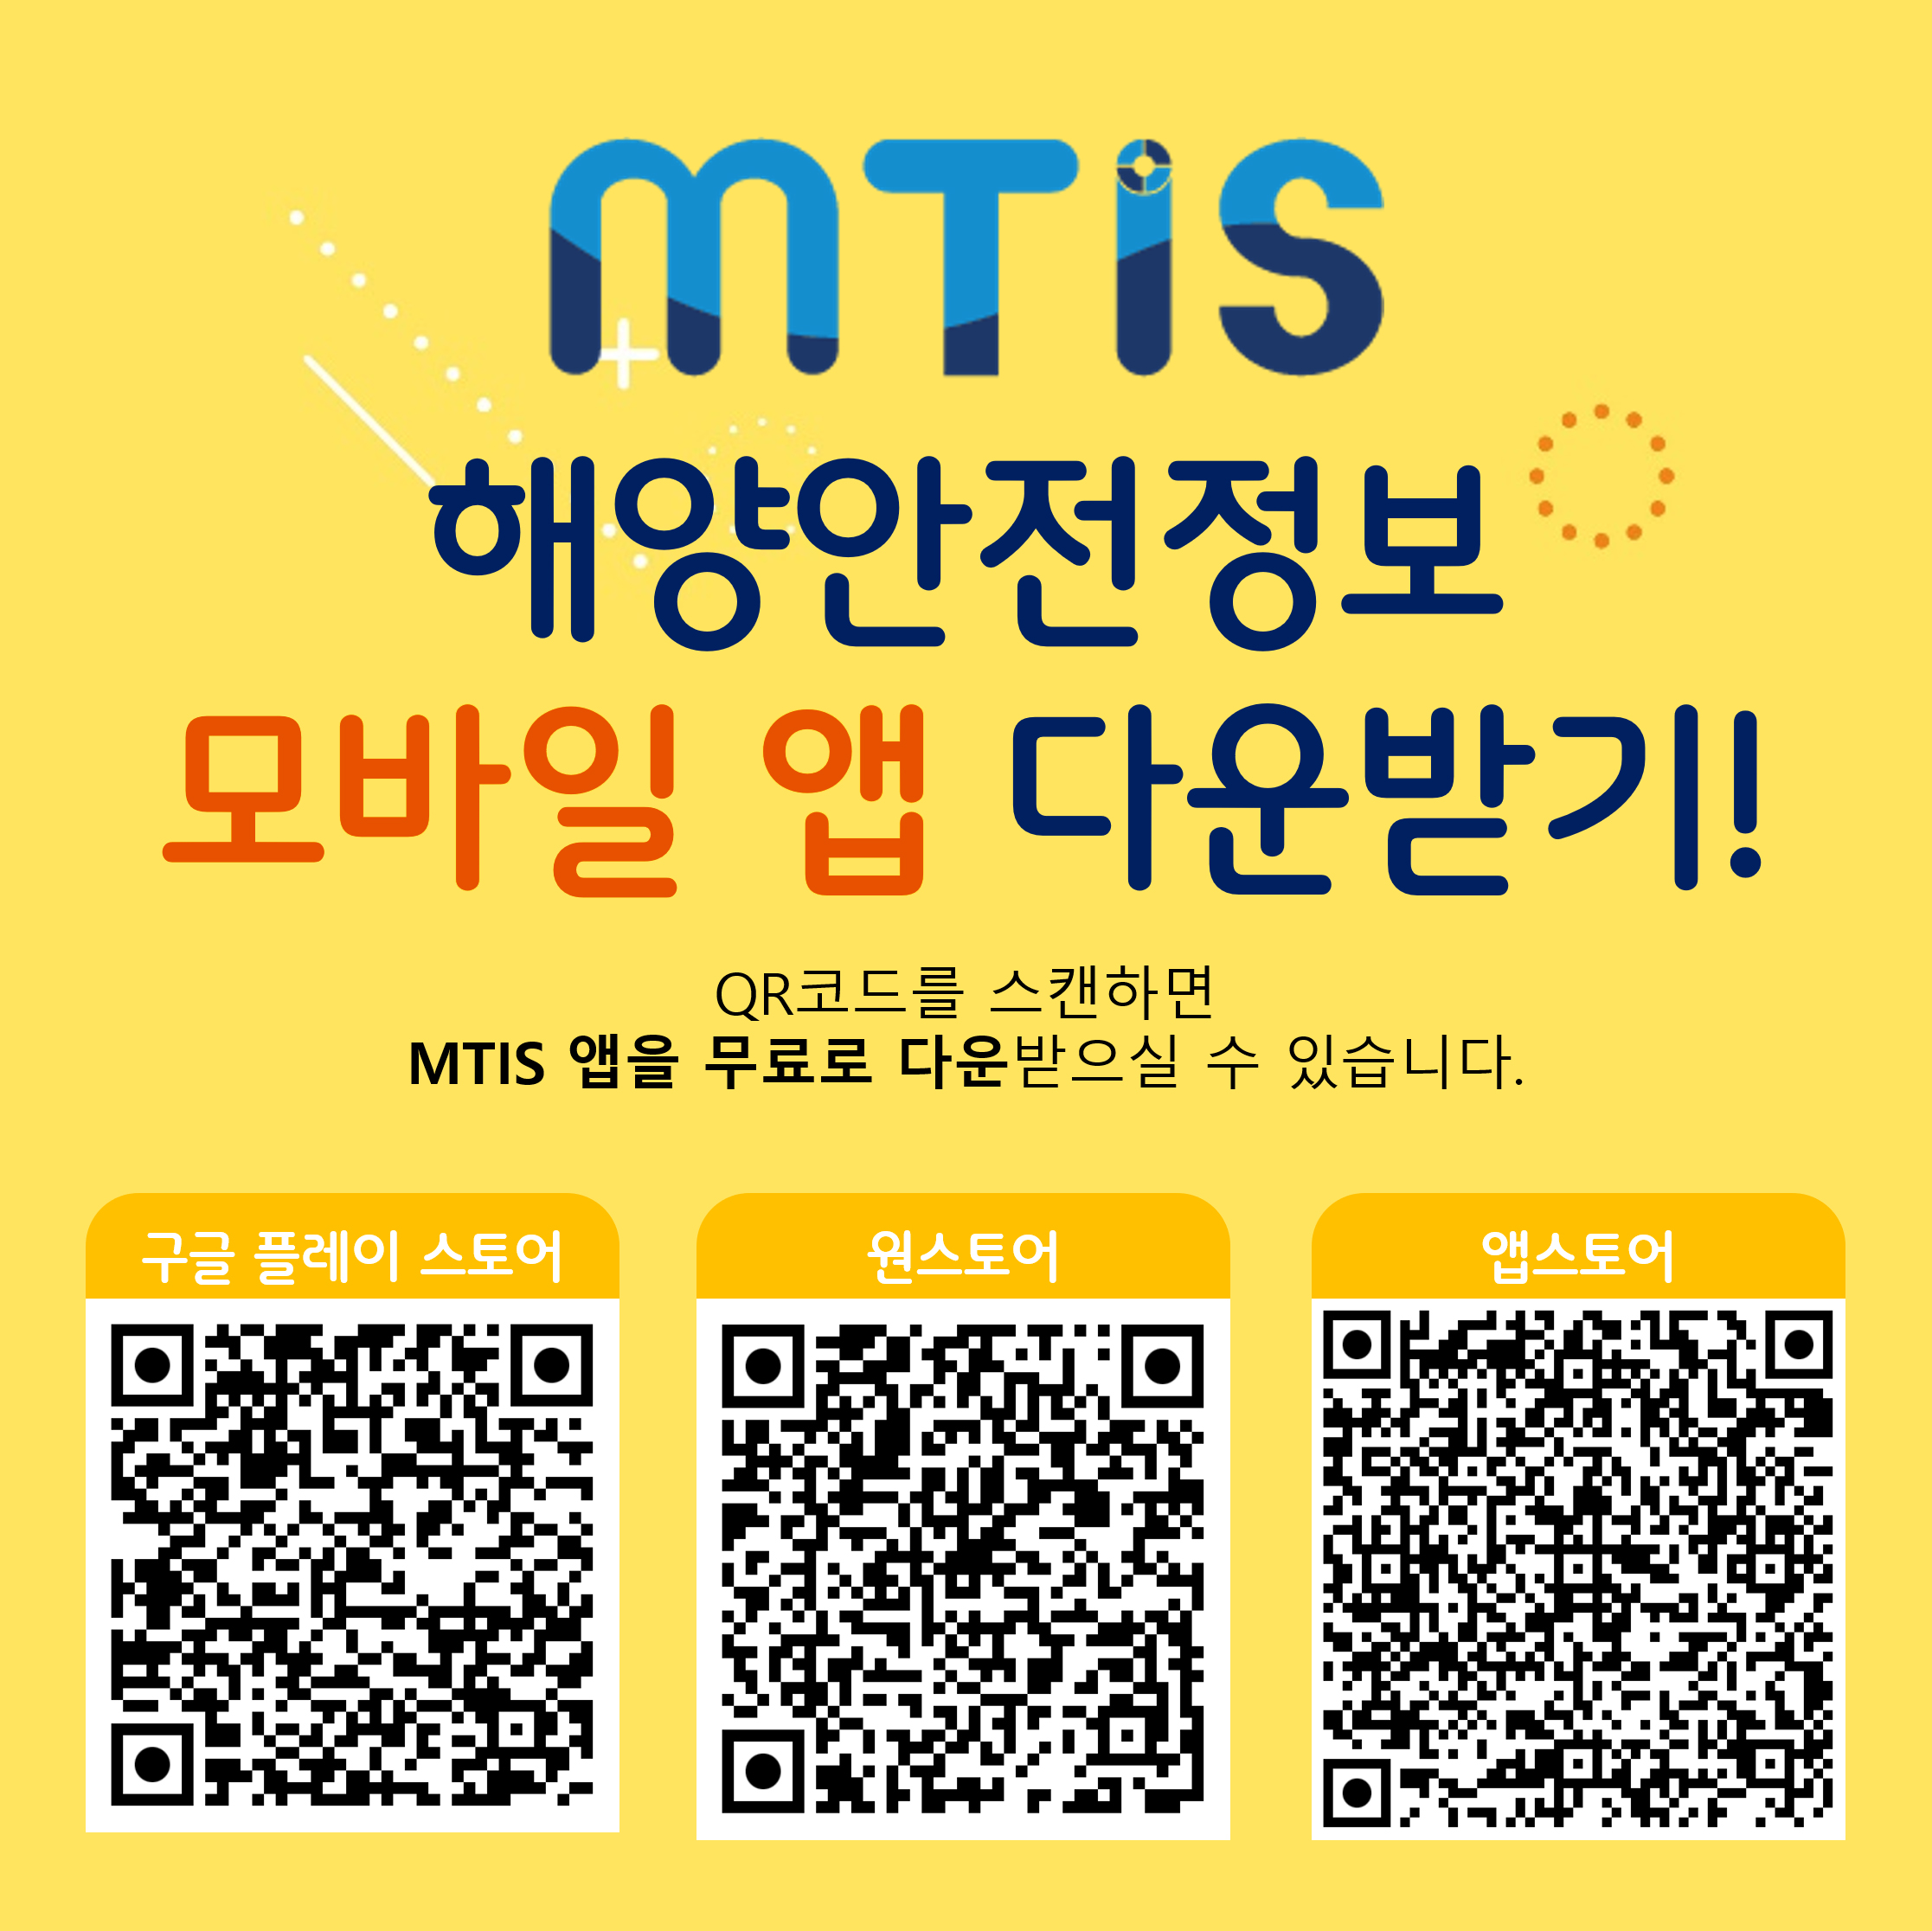 MTIS 해양안전정보 모바일 앱 다운받기!
QR코드를 스캔하면 MTIS 앱을 무료로 다운 받으실수 있습니다.
구글 플레이 스토어 : https://play.google.com/store/apps/details;jsessionid=B521281A5D566D490B7820754C3FEC48?id=kr.or.komsa.mtis
원스토어 : https://m.onestore.co.kr/mobilepoc/apps/appsDetail.omp?prodId=0000771271
앱스토어 : https://apps.apple.com/kr/app/%ED%95%B4%EC%96%91%EA%B5%90%ED%86%B5%EC%95%88%EC%A0%84%EC%A0%95%EB%B3%B4/id6462842483